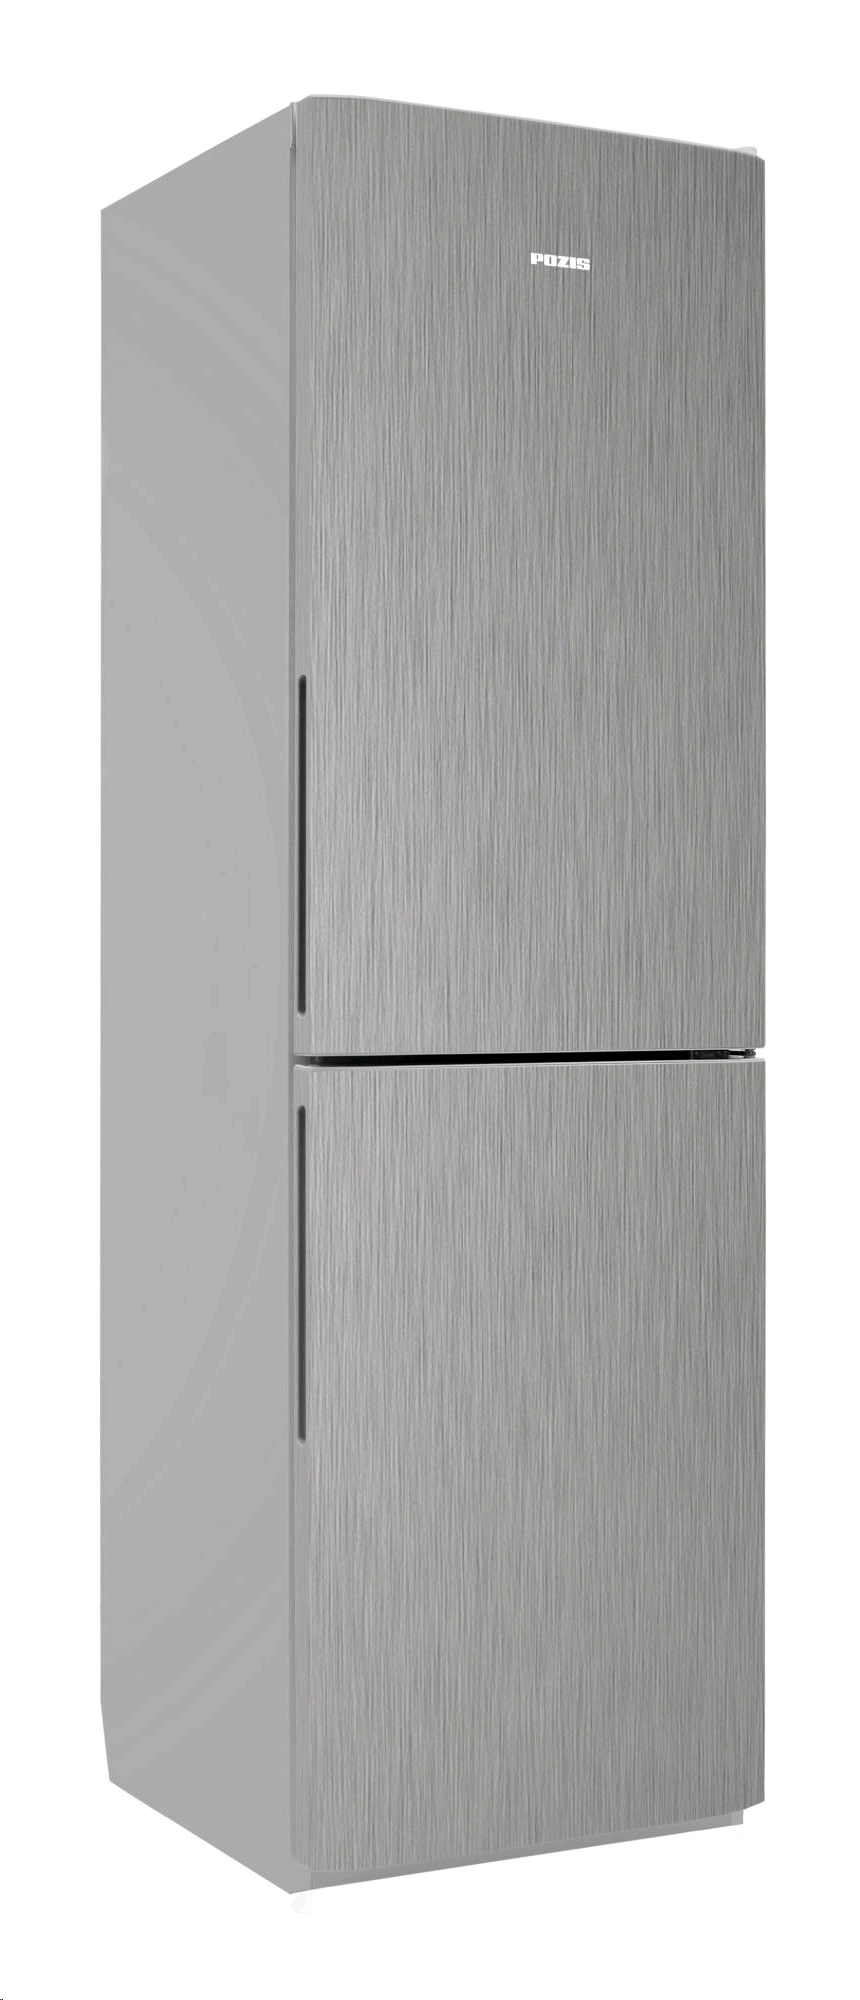 Pozis RK FNF-172 s+ серый металлопласт холодильник